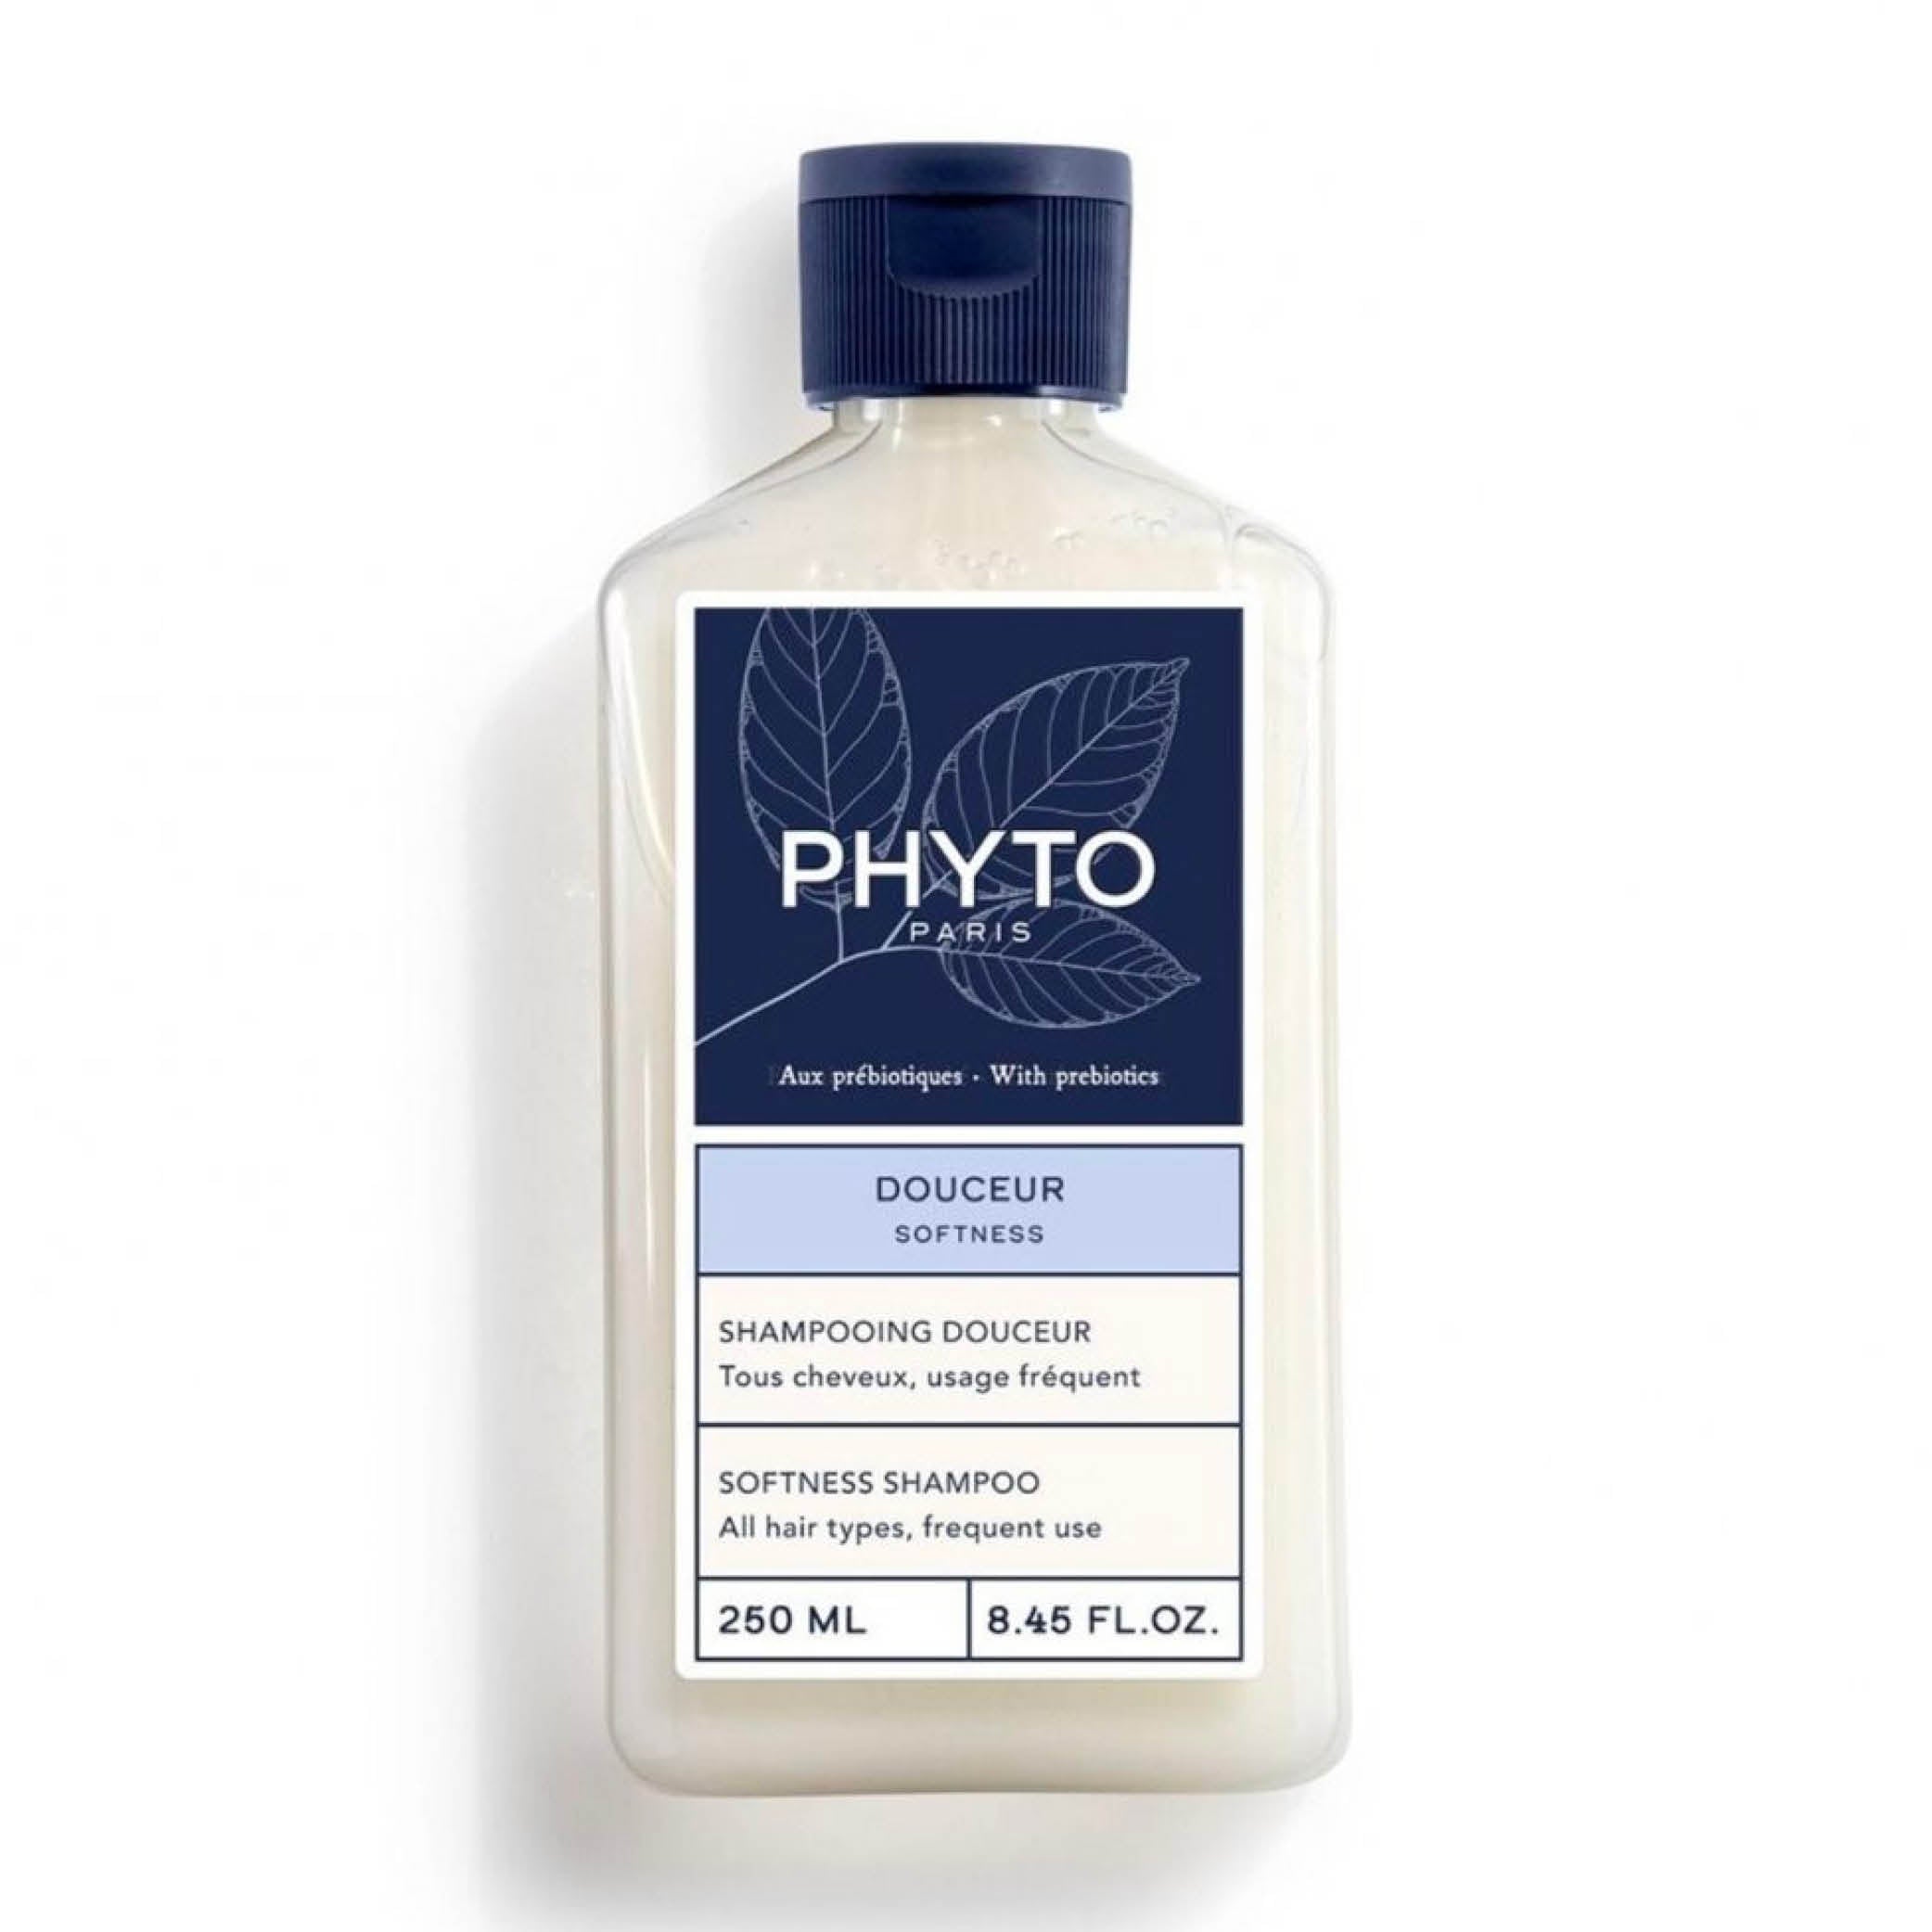 PHYTOSOFTNESS Softness Shampoo